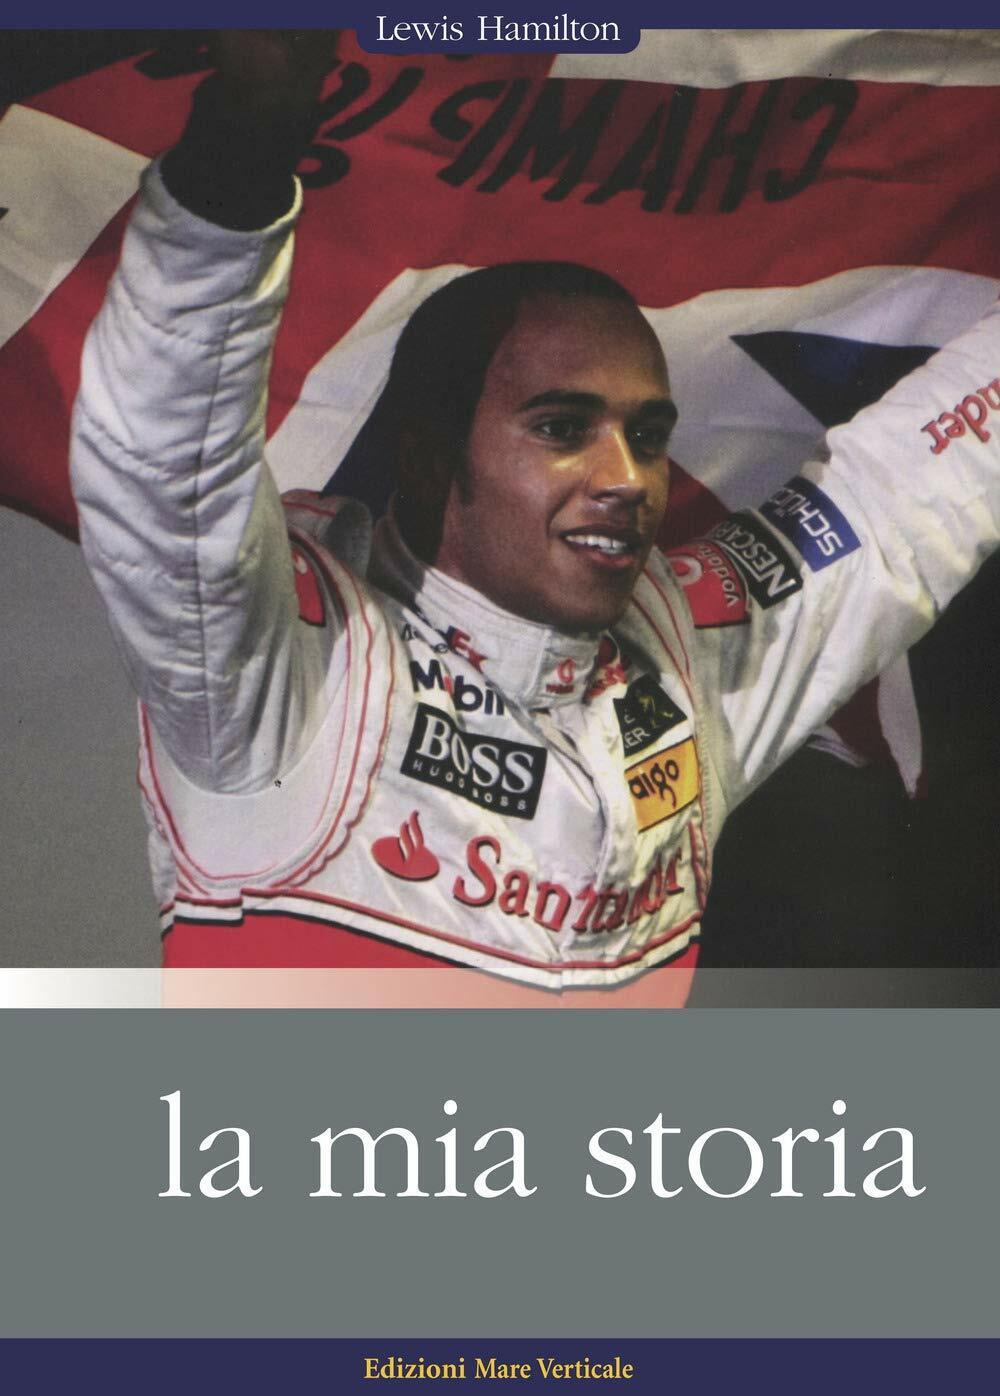 Lewis Hamilton, la mia storia - Lewis Hamilton - mare verticale, 2020